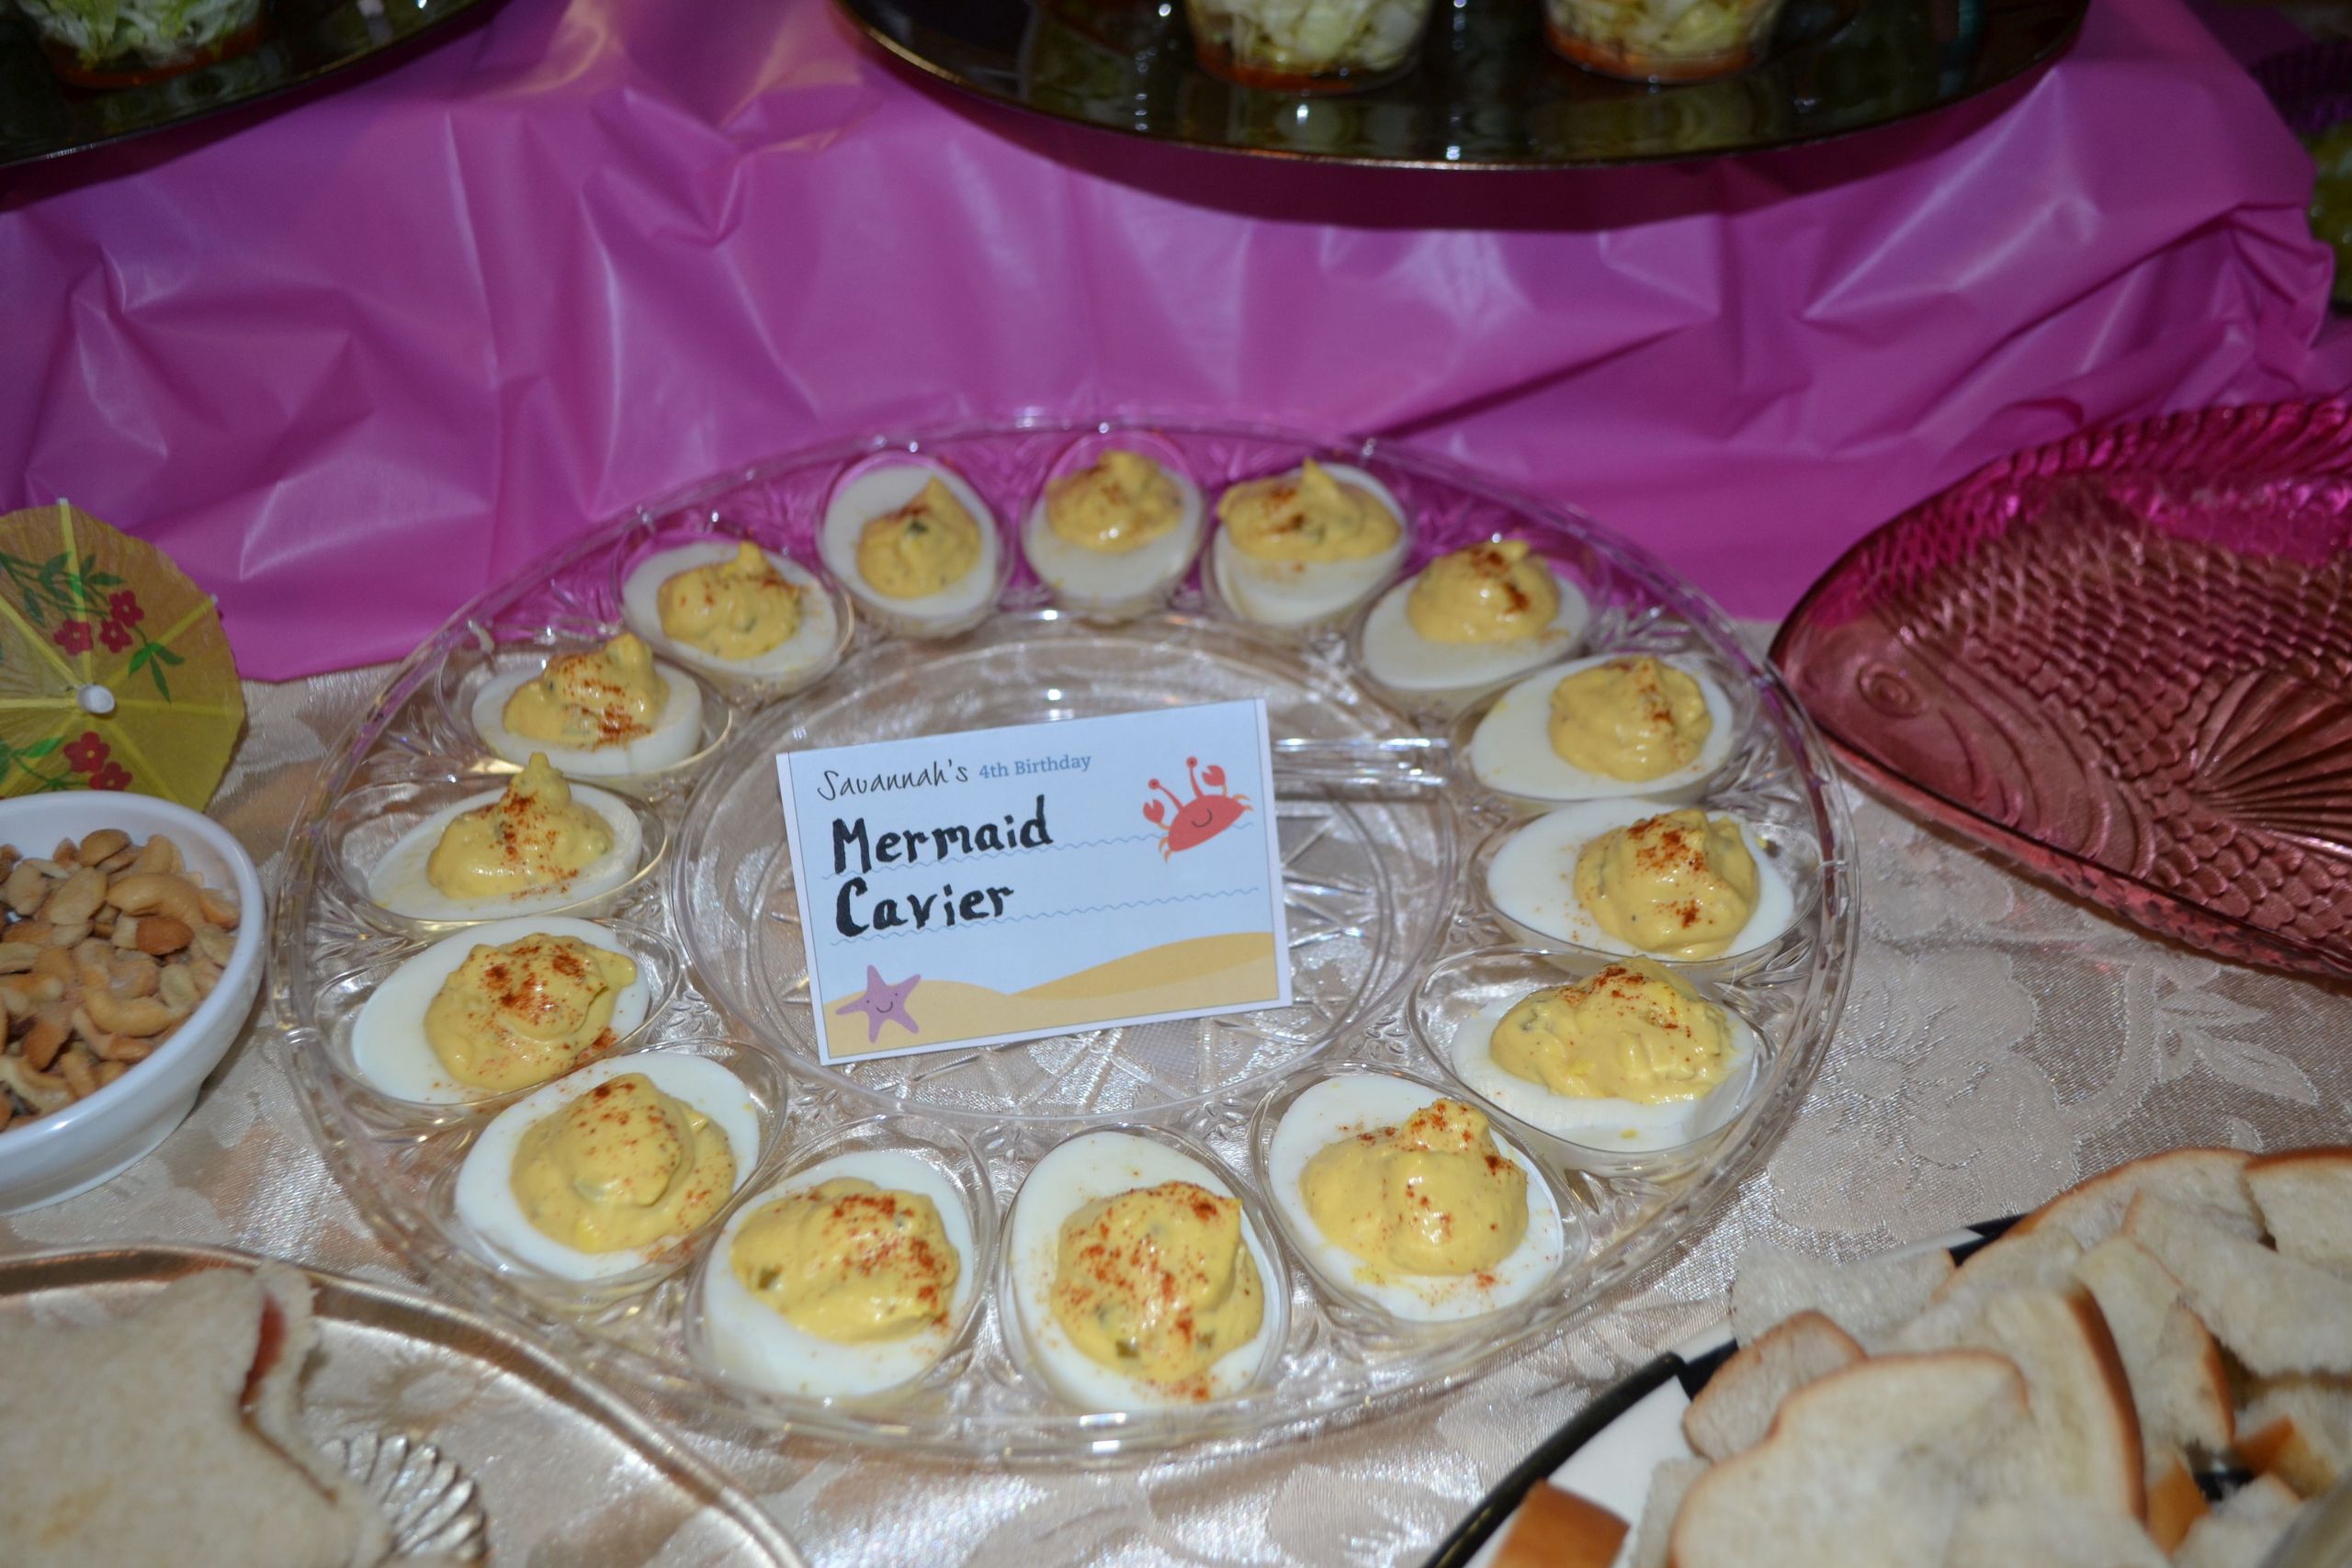 Food Ideas For Mermaid Party
 Little mermaid party food "Mermaid Cavier" traditional